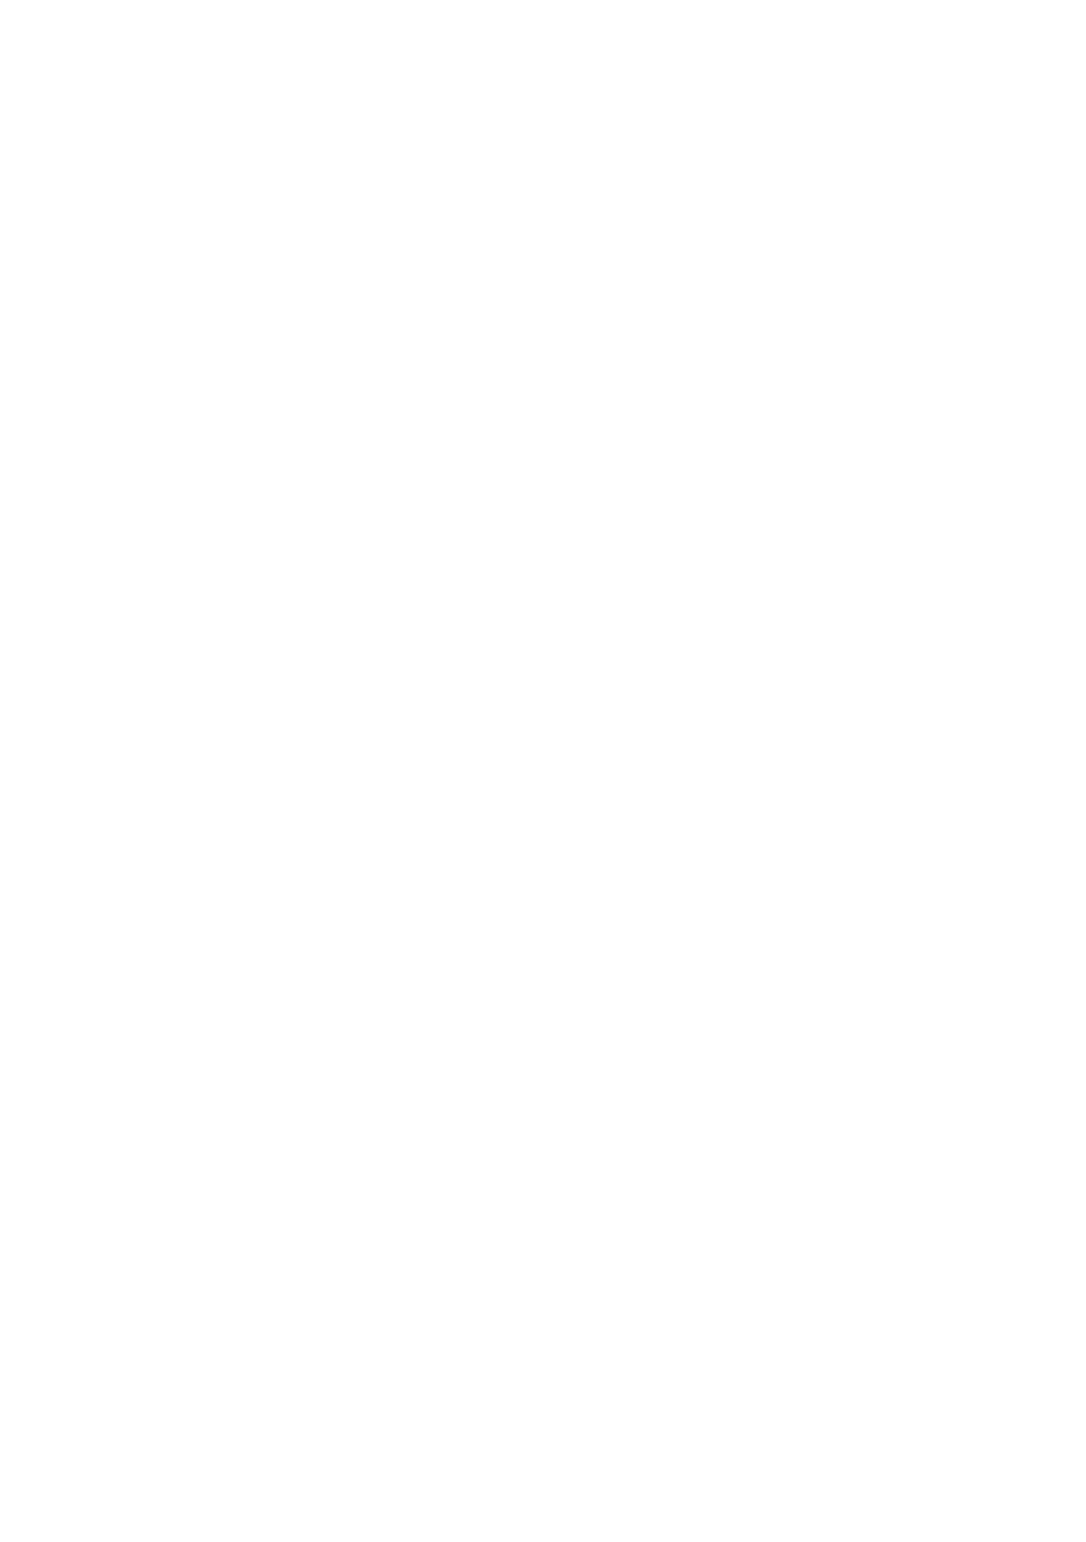 Peloton logo for dark backgrounds (transparent PNG)